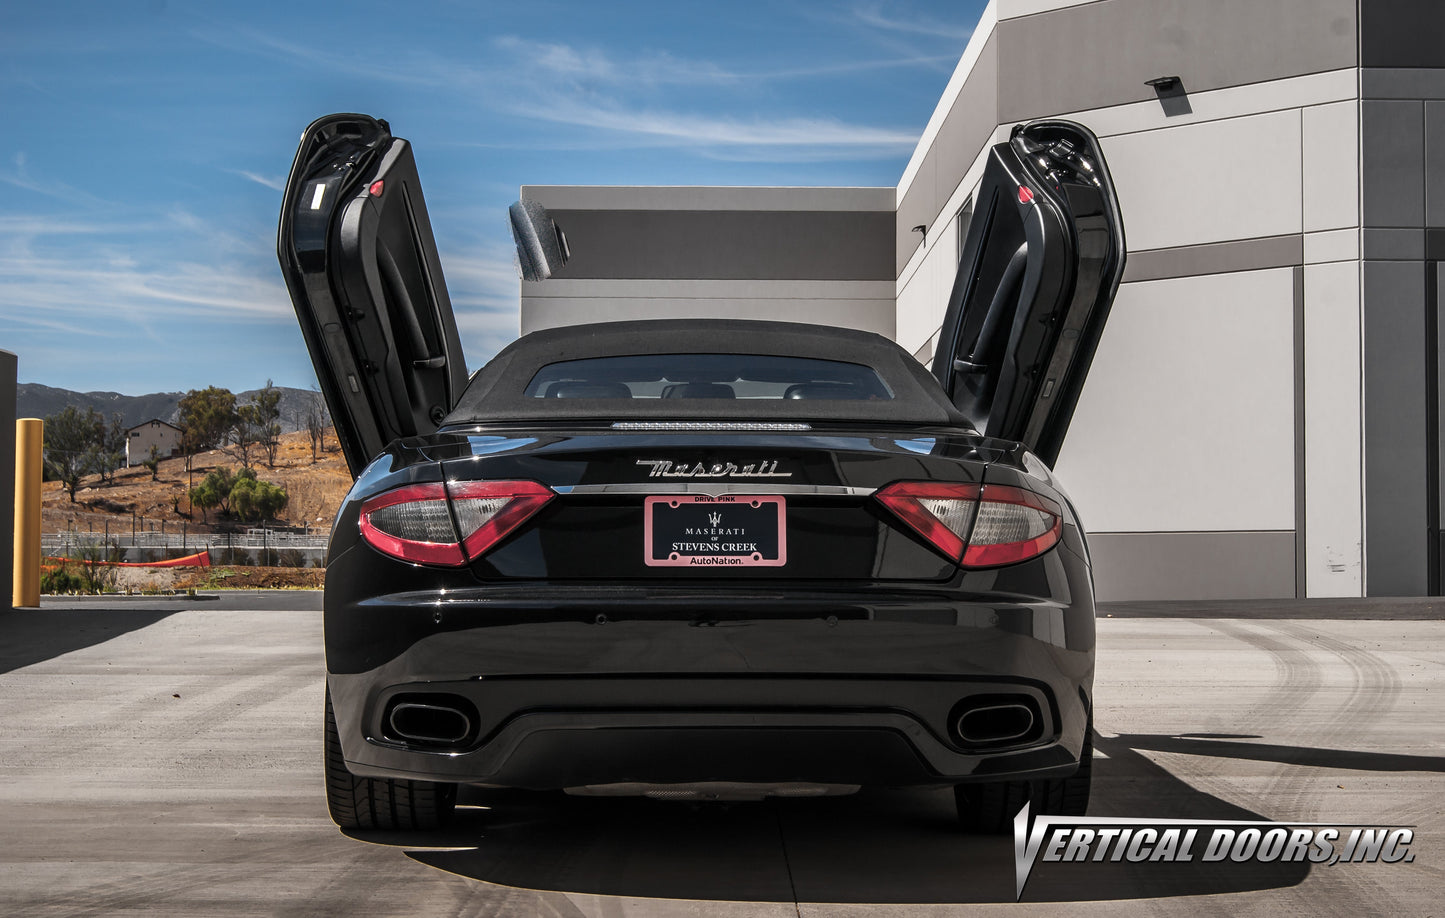 Maserati Gran Turismo Vertical Doors Inc Kit | 2007-2018